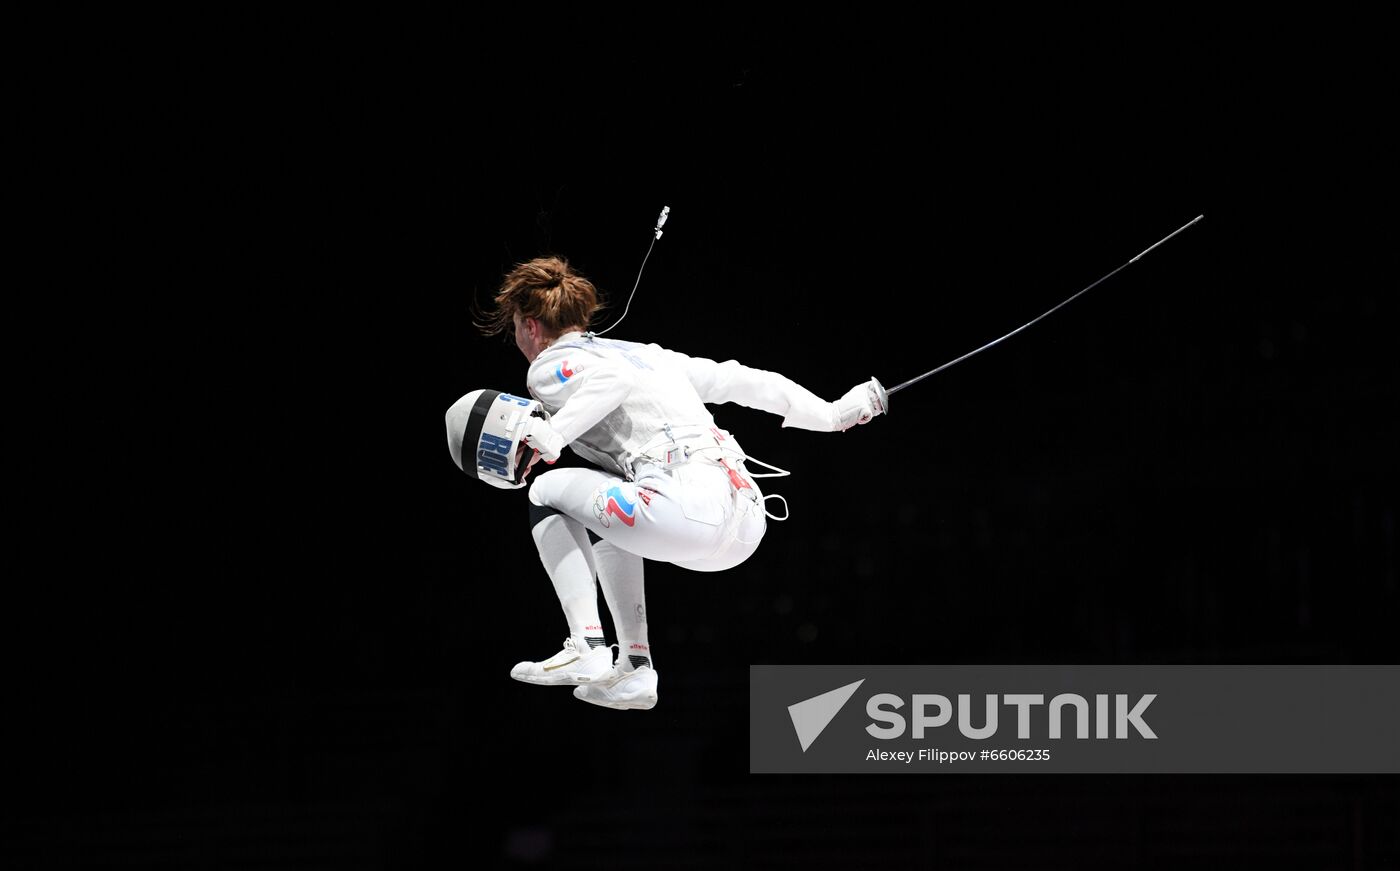 Japan Olympics 2020 Fencing Women Foil